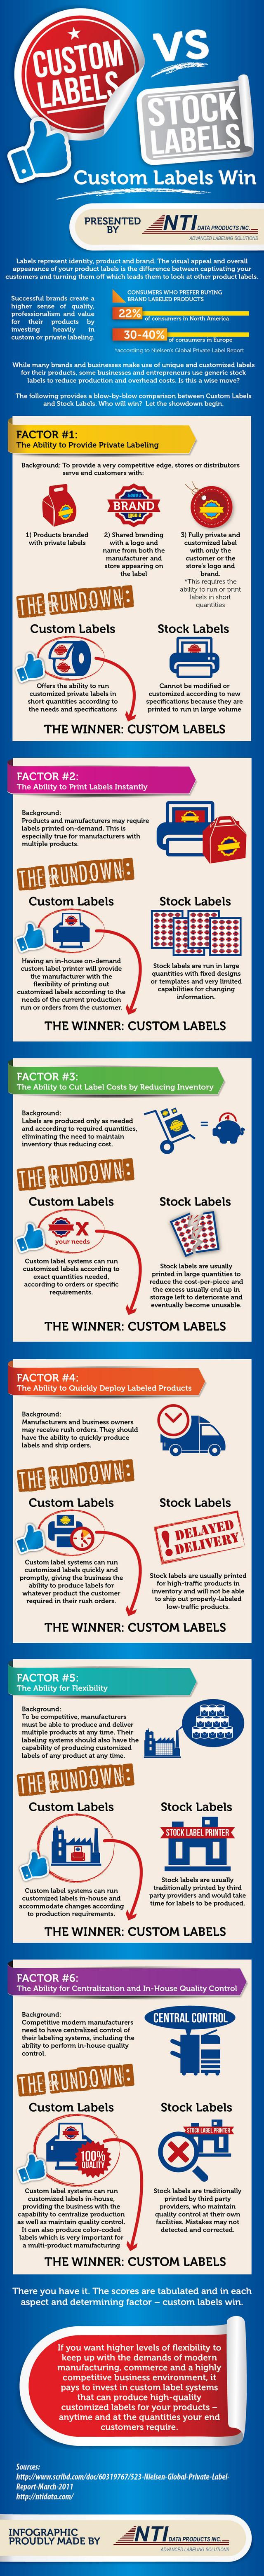 Custom-Labels-vs-Stock-Labels-infographic